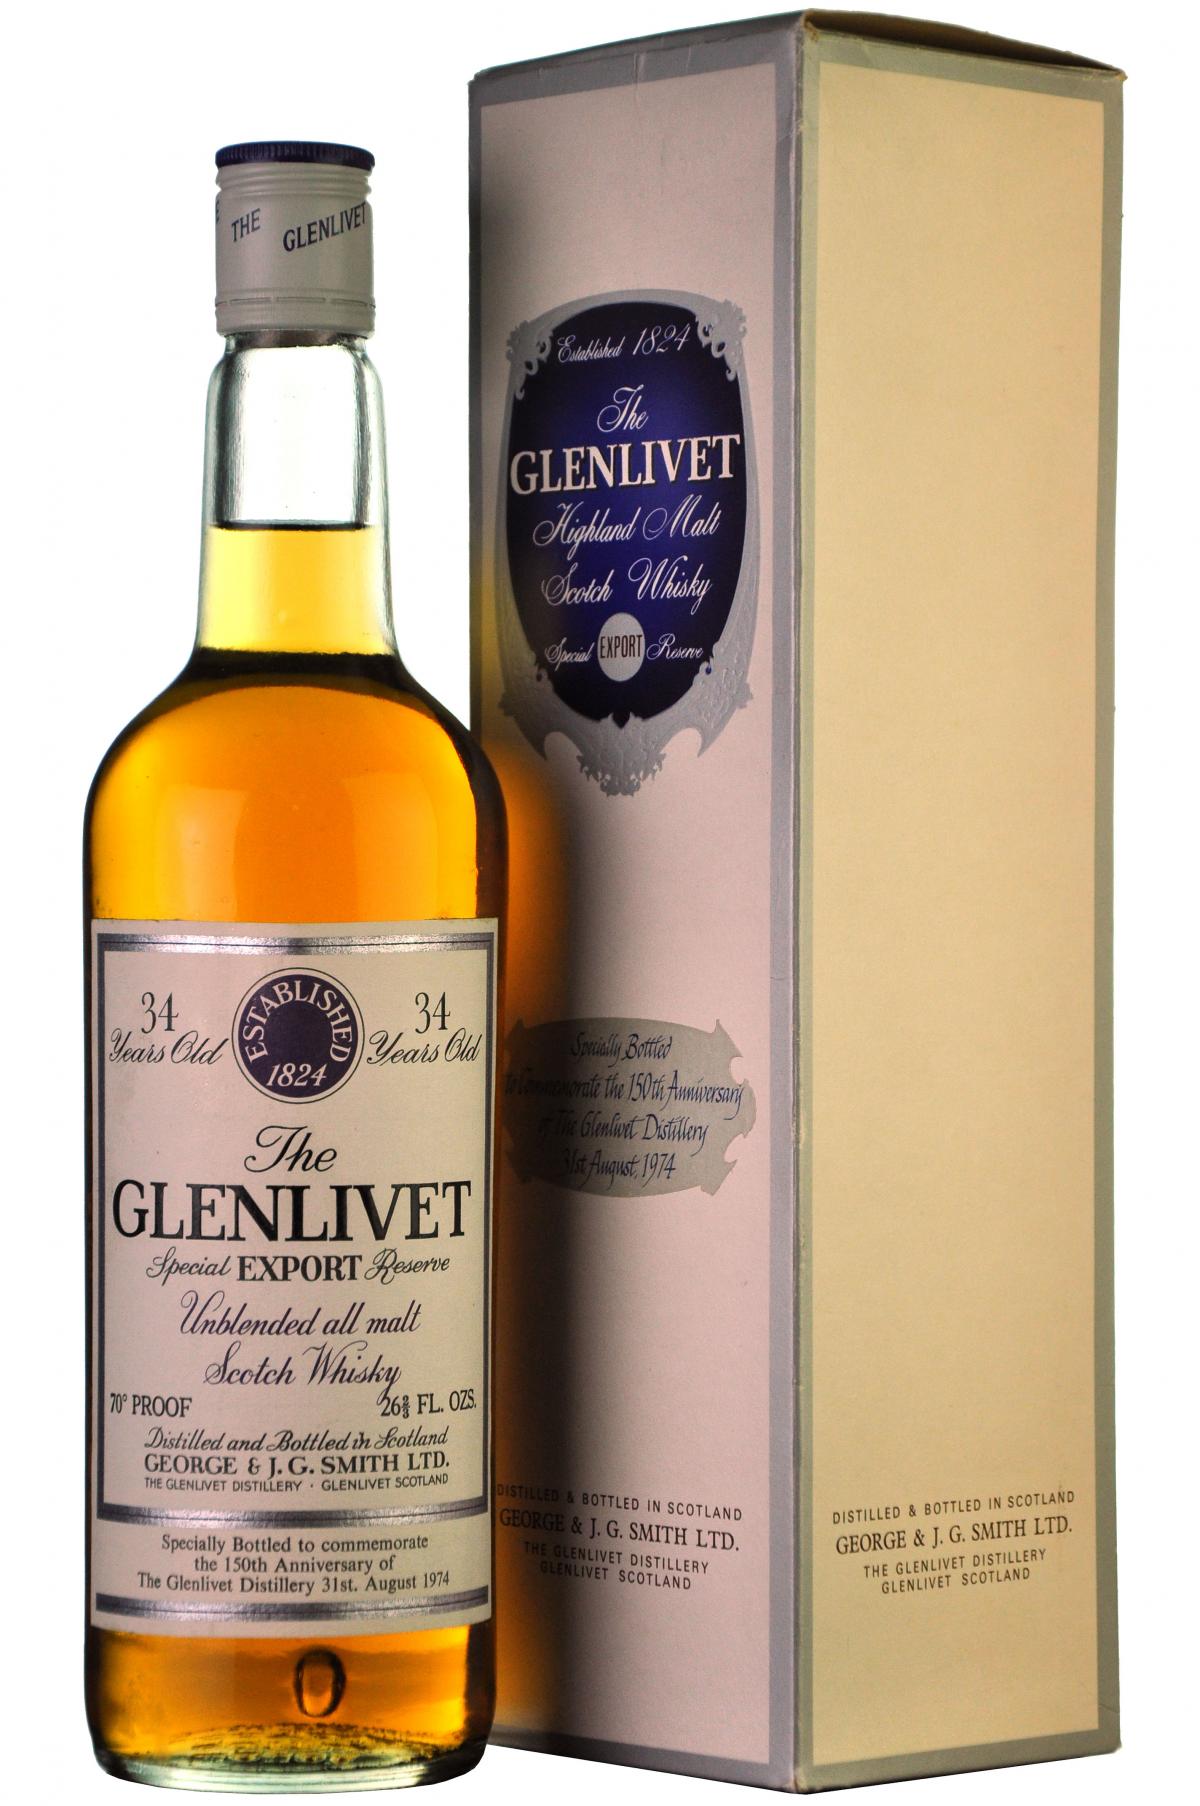 Glenlivet 34 Year Old 150th Anniversary 1824-1974